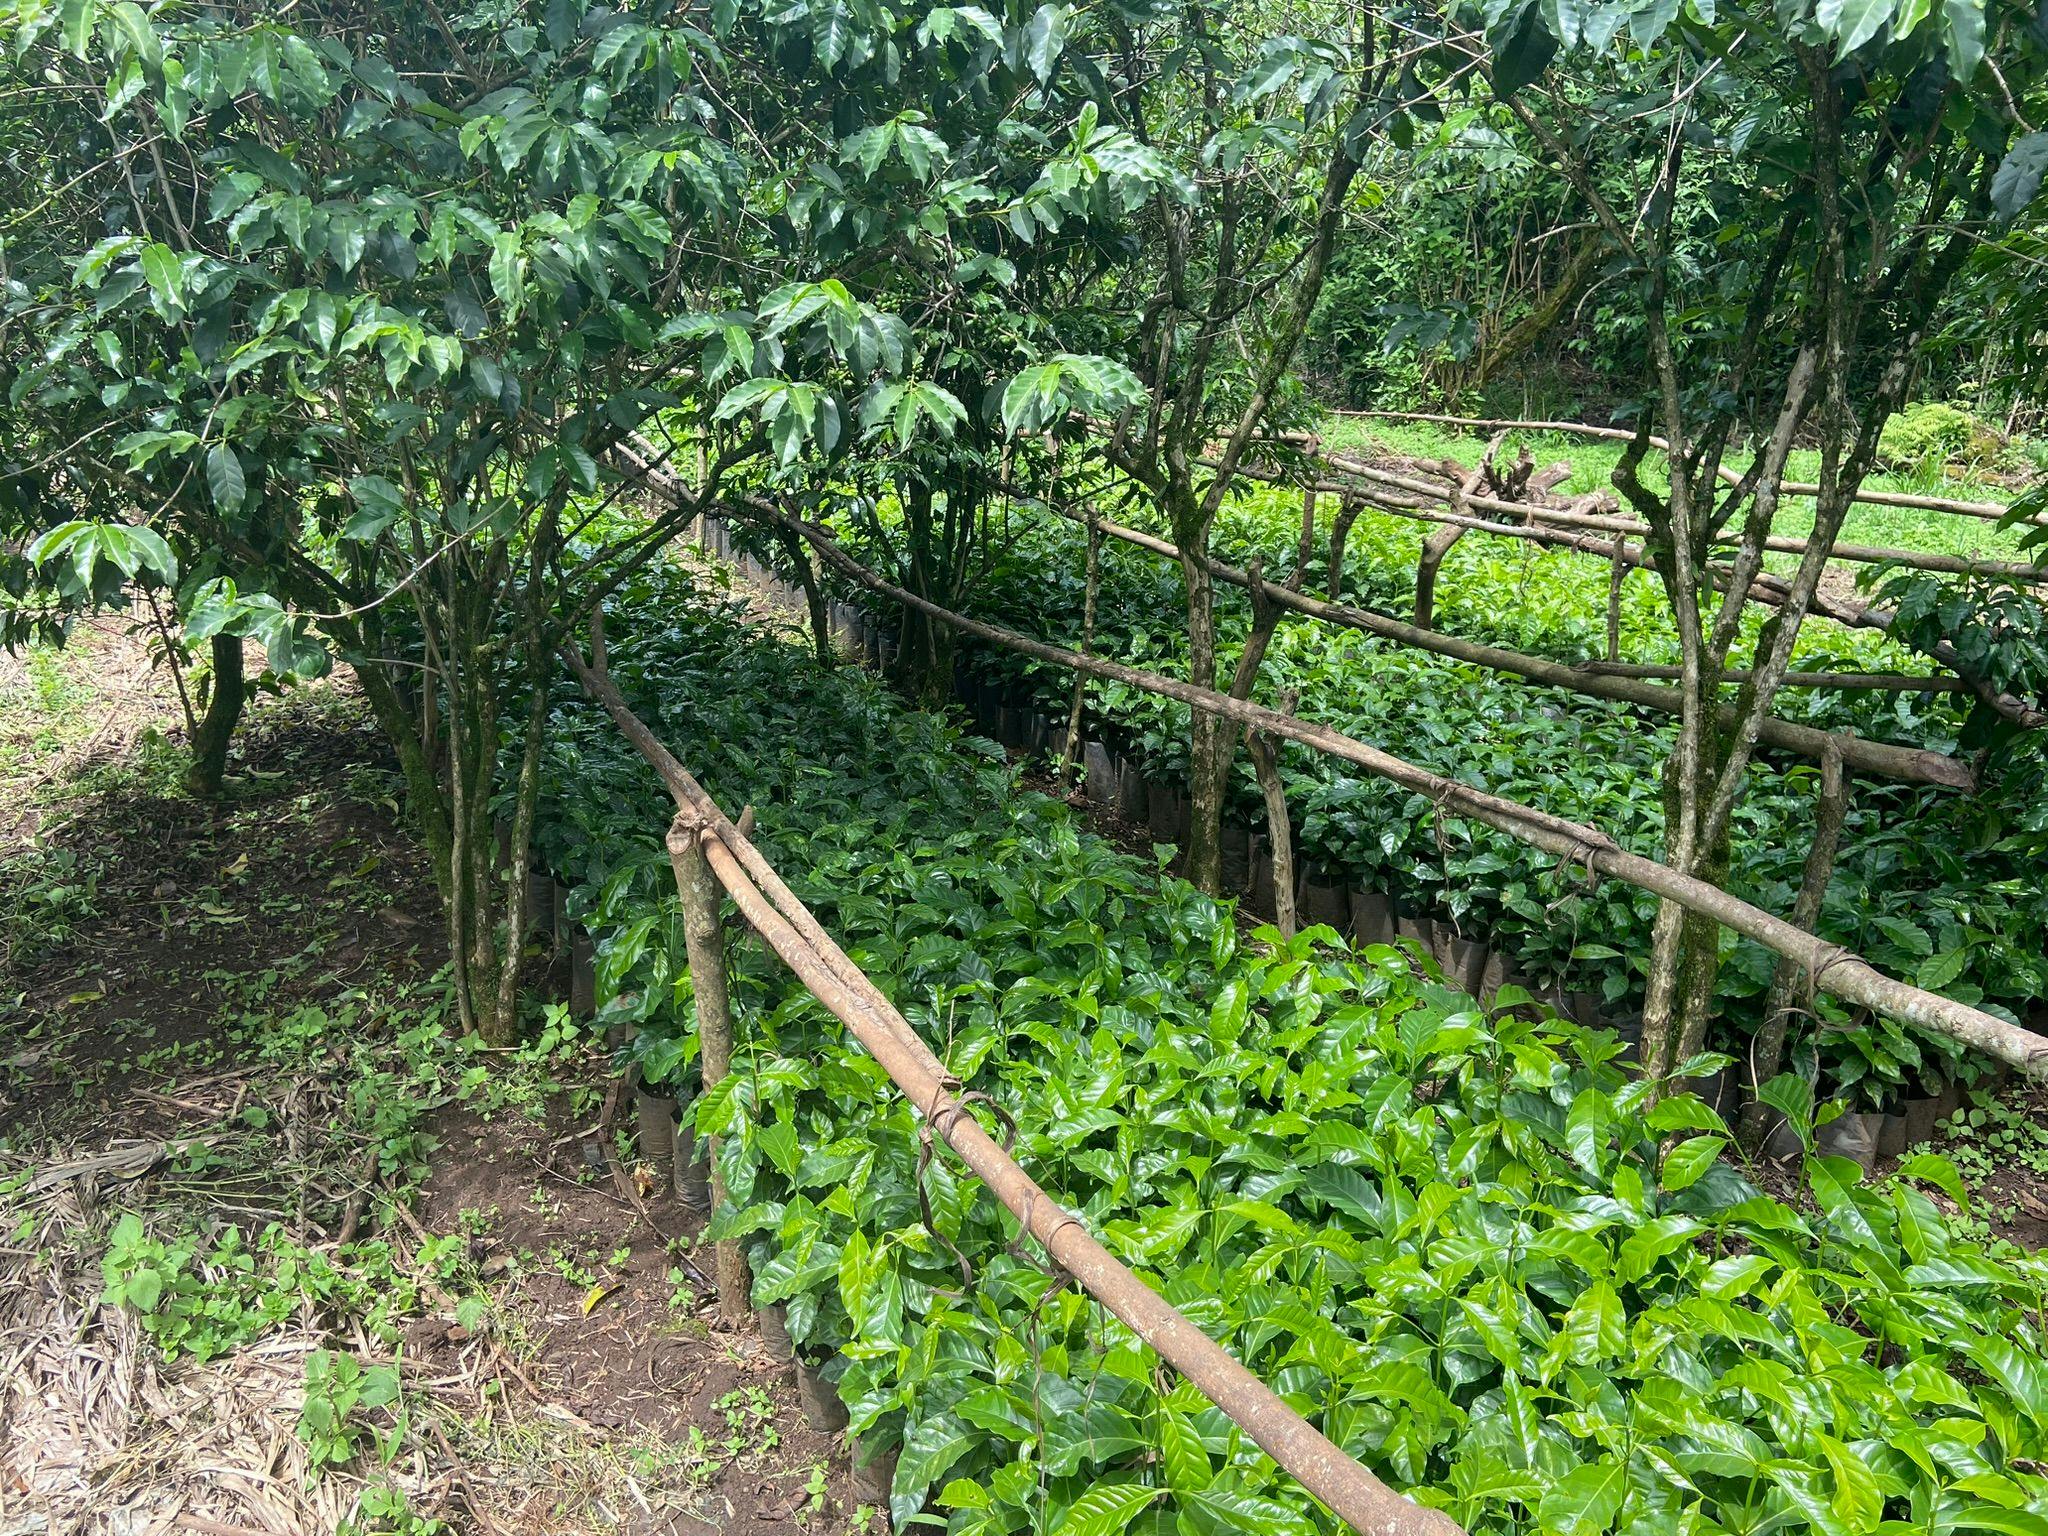 A coffee nursery in Ethiopia